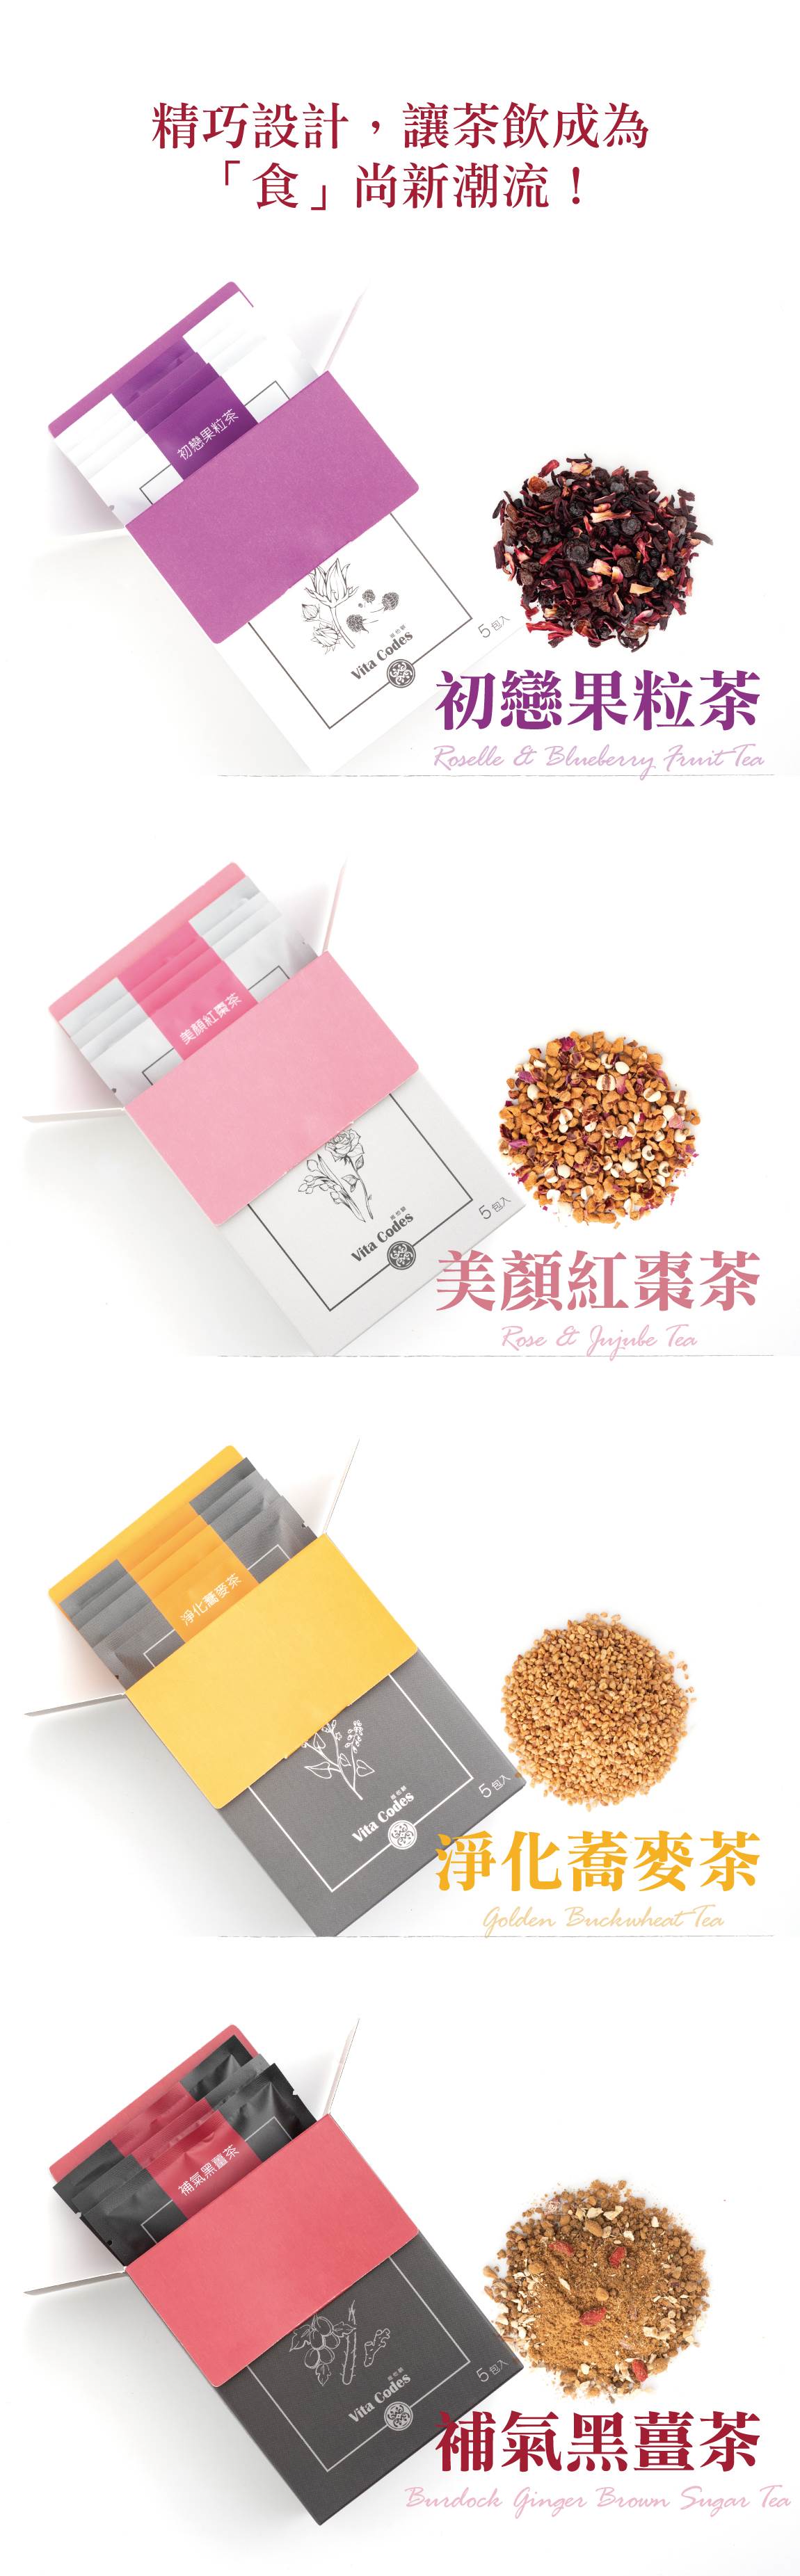 VitaCodes美顏茶-產品介紹10-美顏茶設計款-食尚新潮流